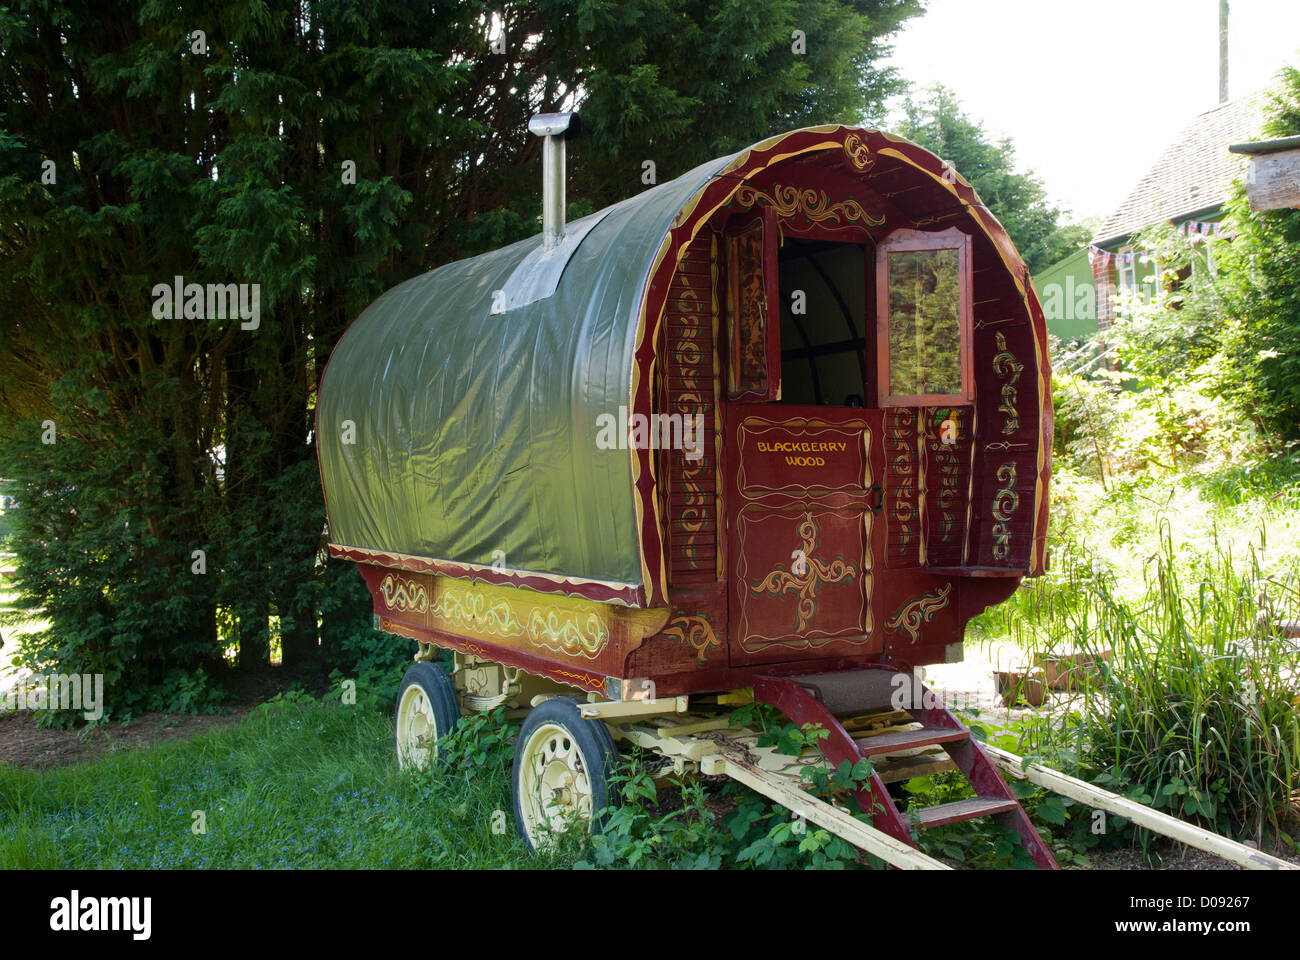 The gypsy caravan, Blackberry Wood, East Sussex, England. Stock Photo